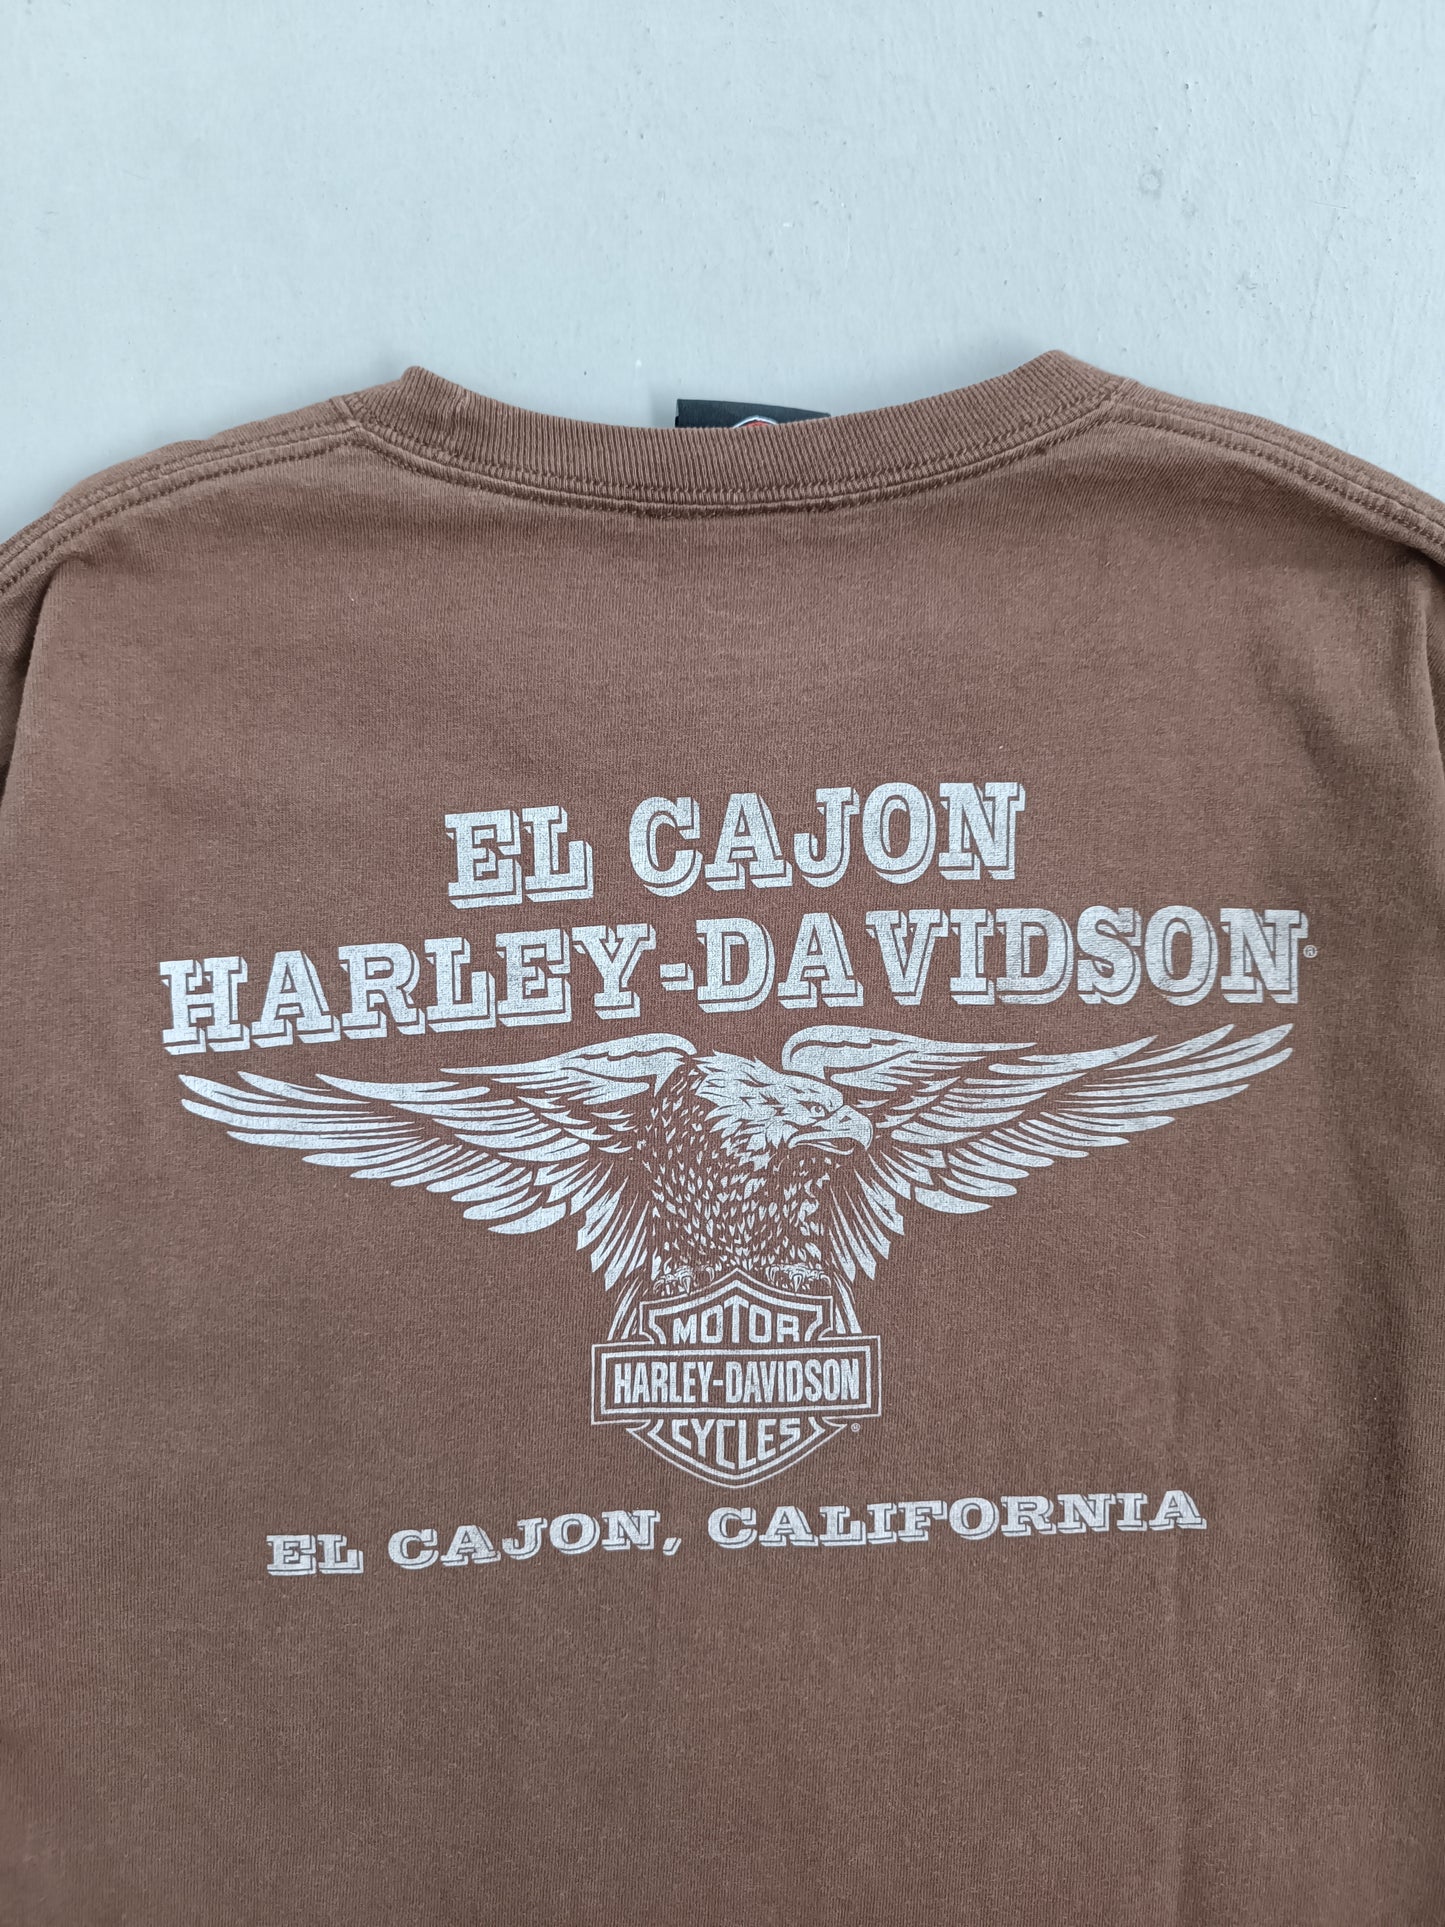 Harley Davidson California - M